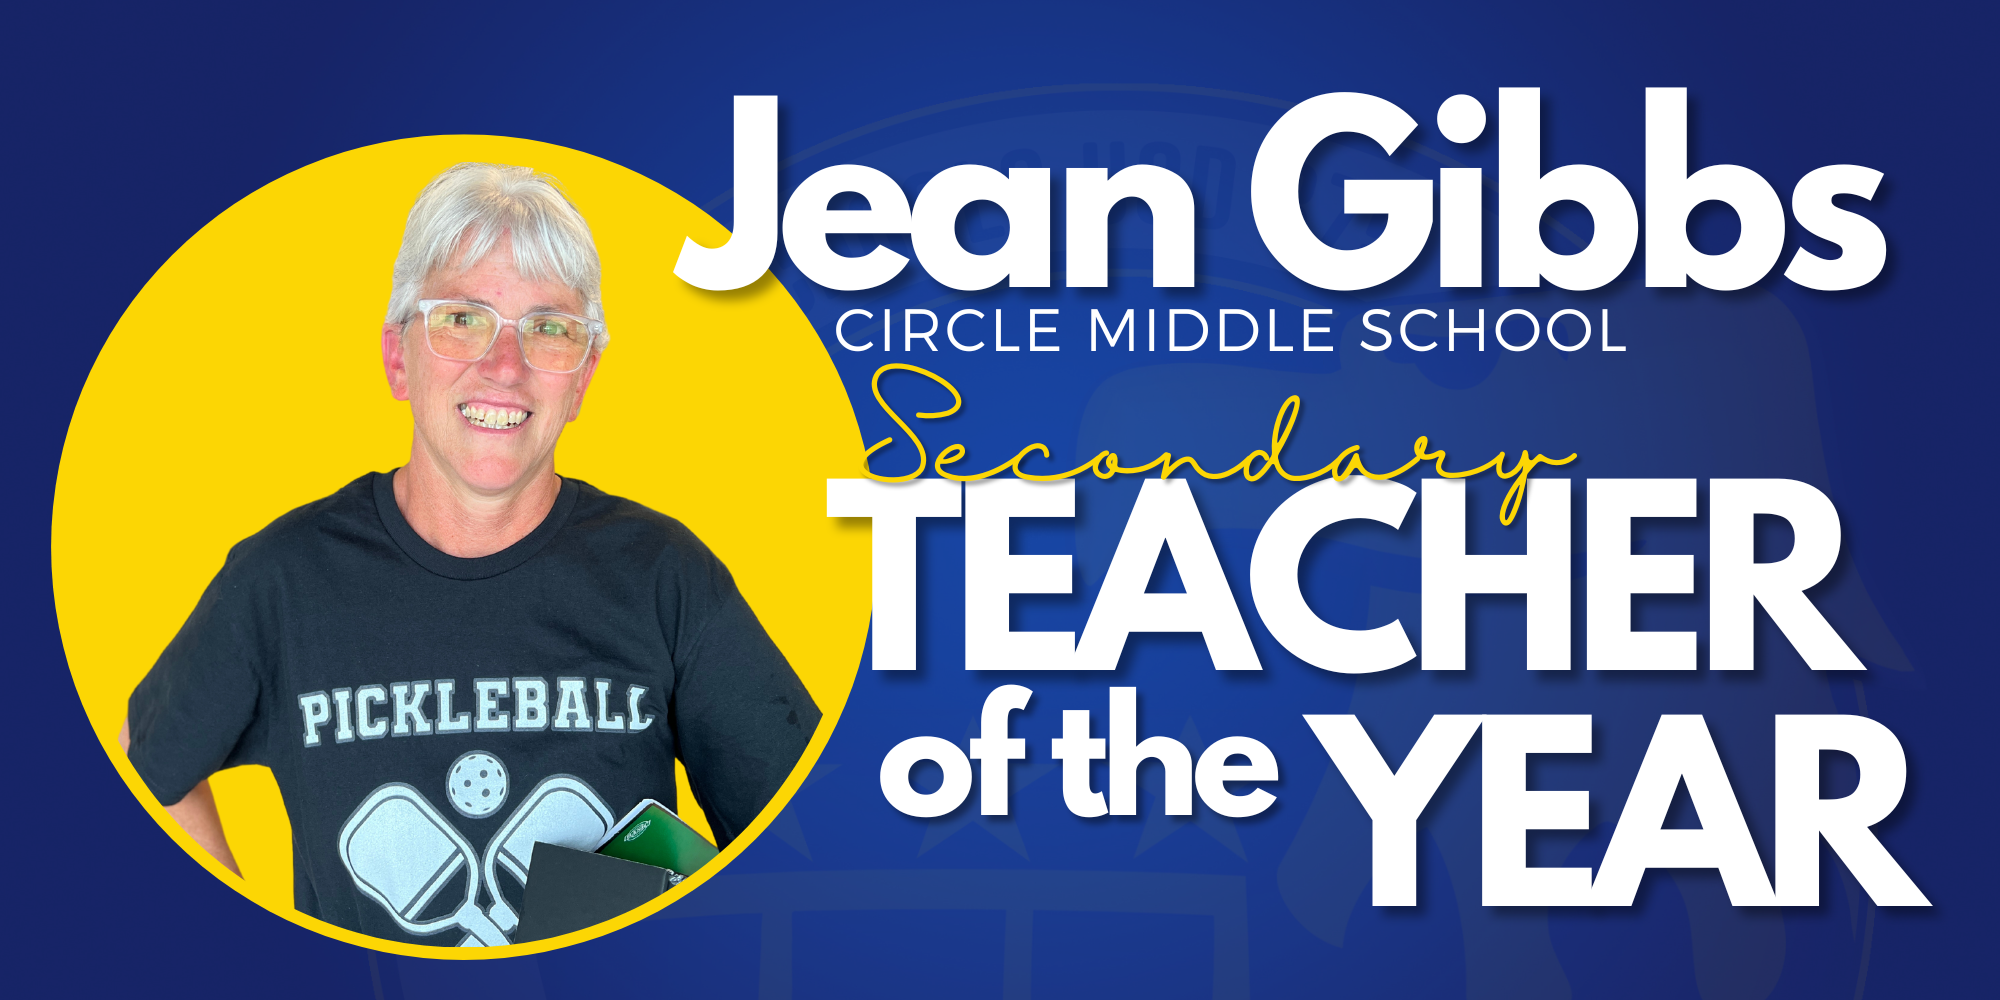 Jean Gibbs, Secondary Teacher of the Year